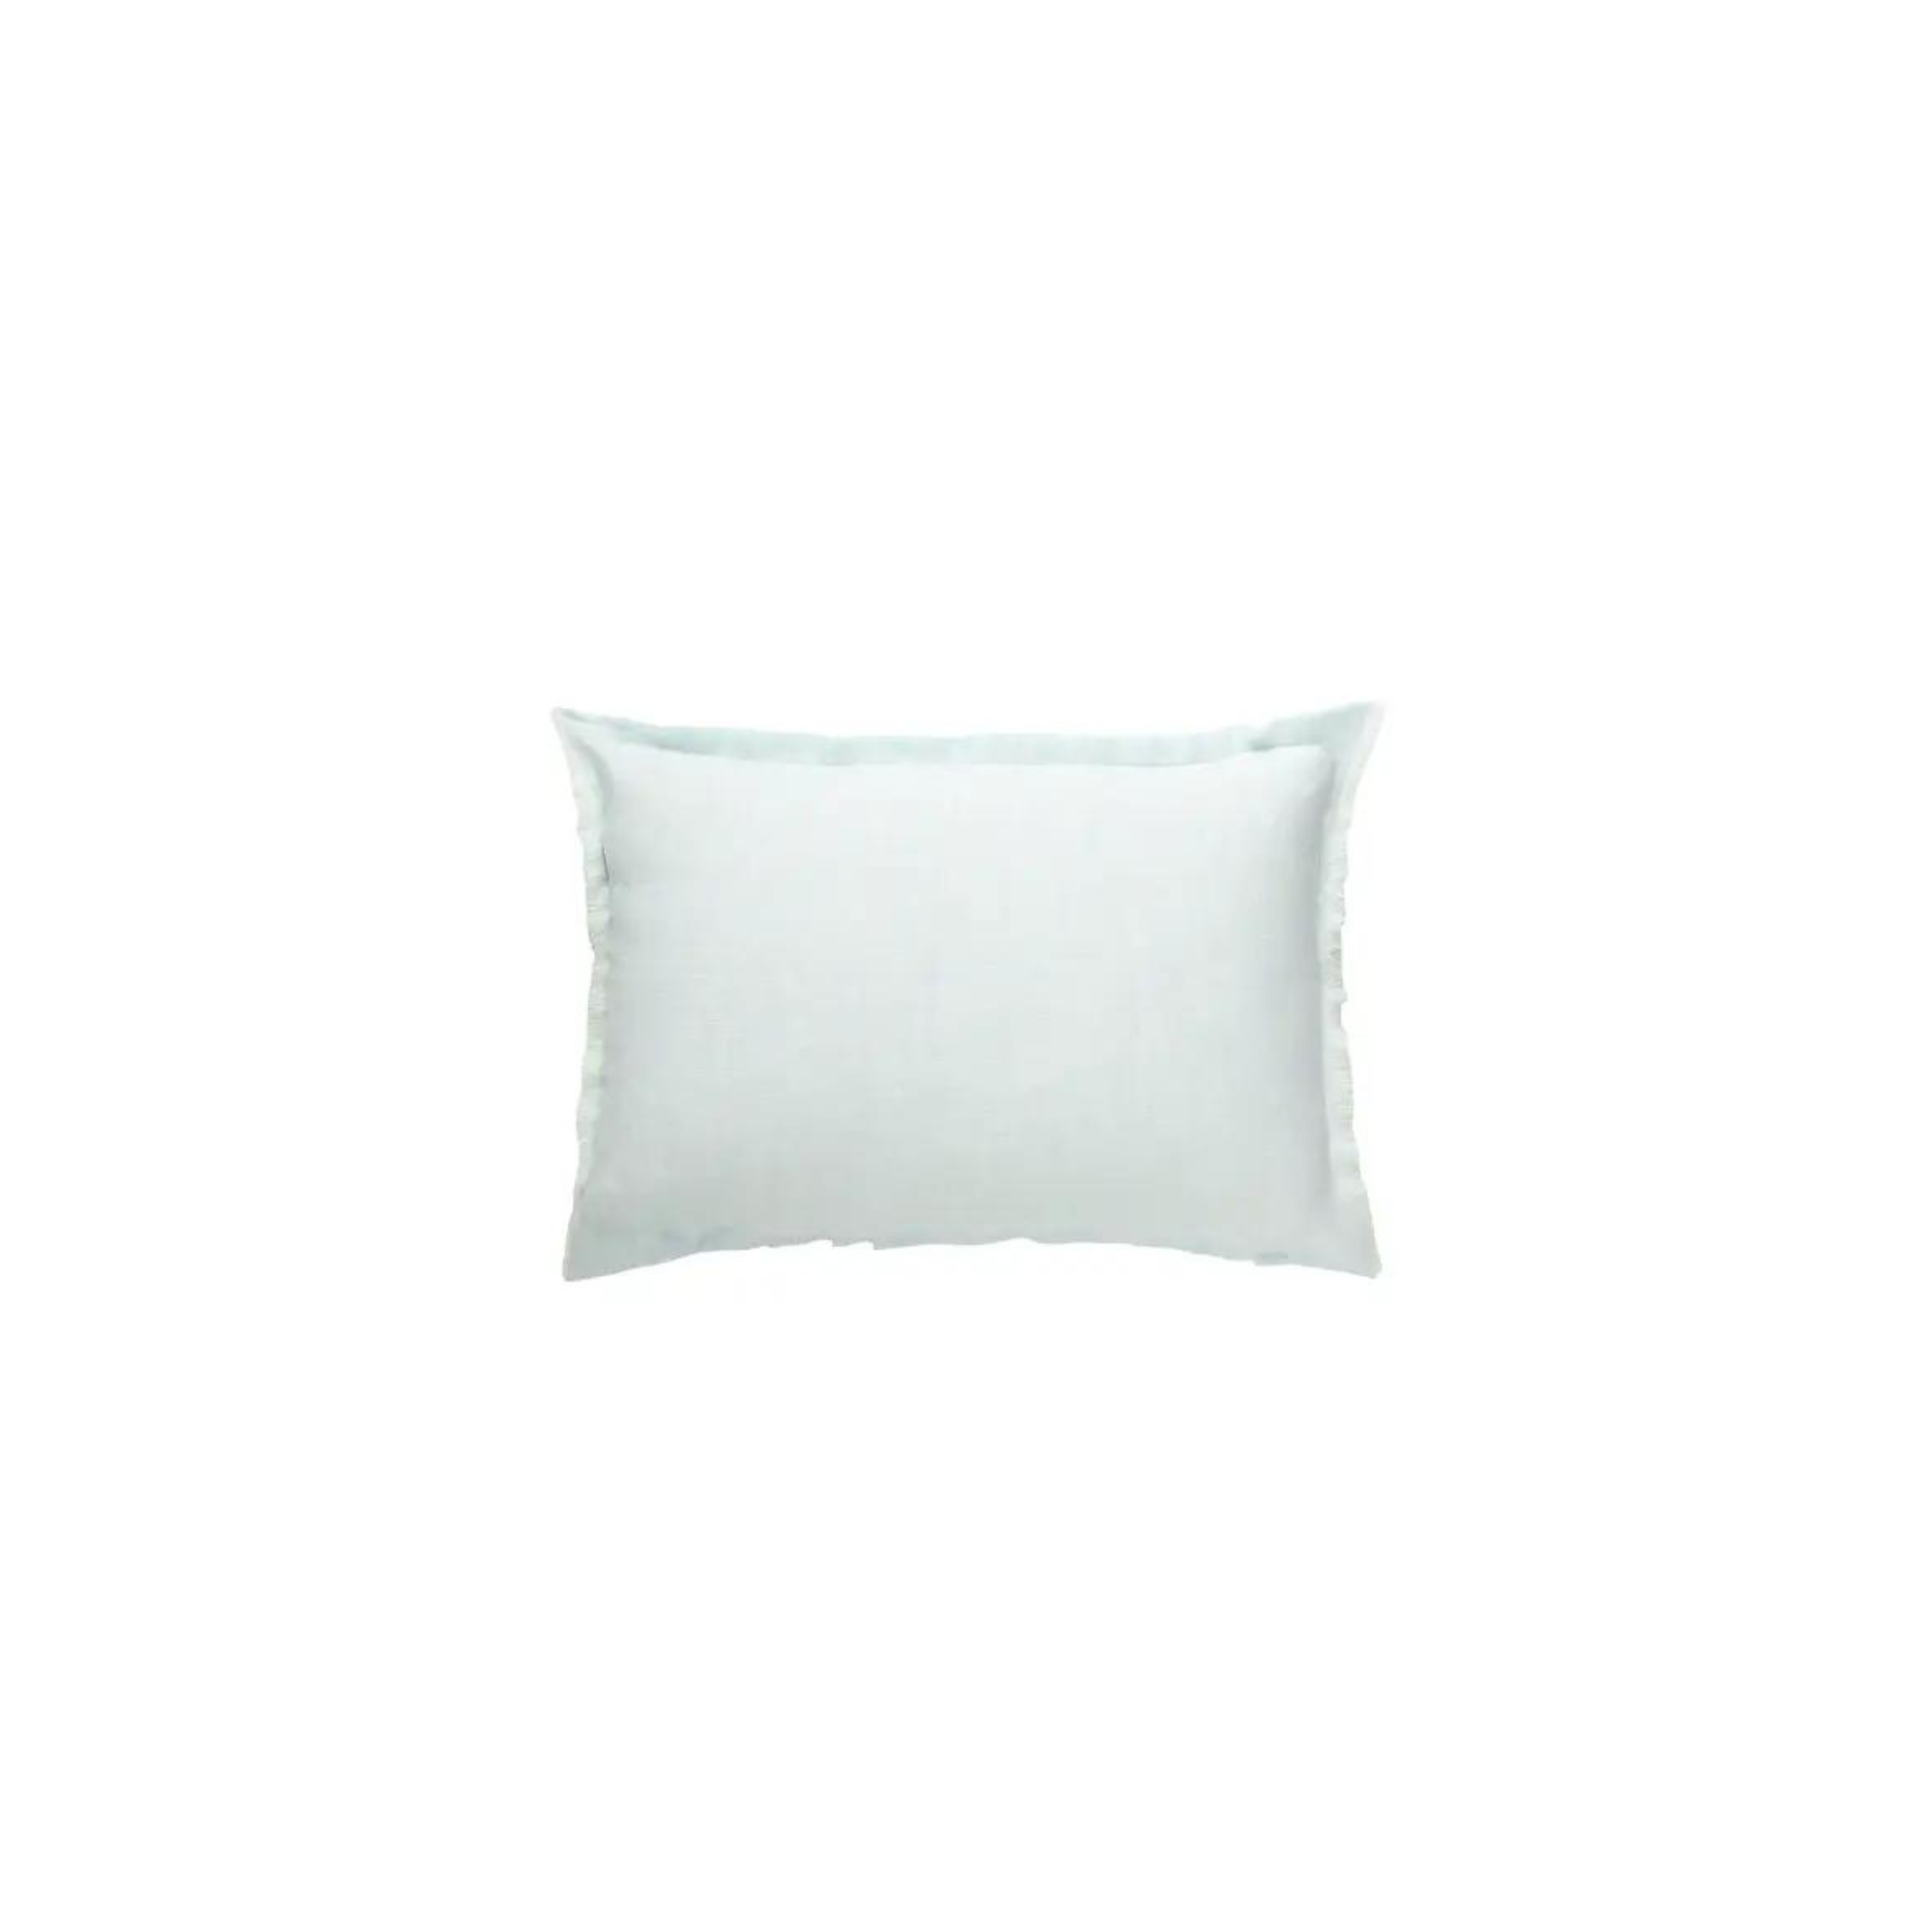 Aqua So Soft Linen Pillows